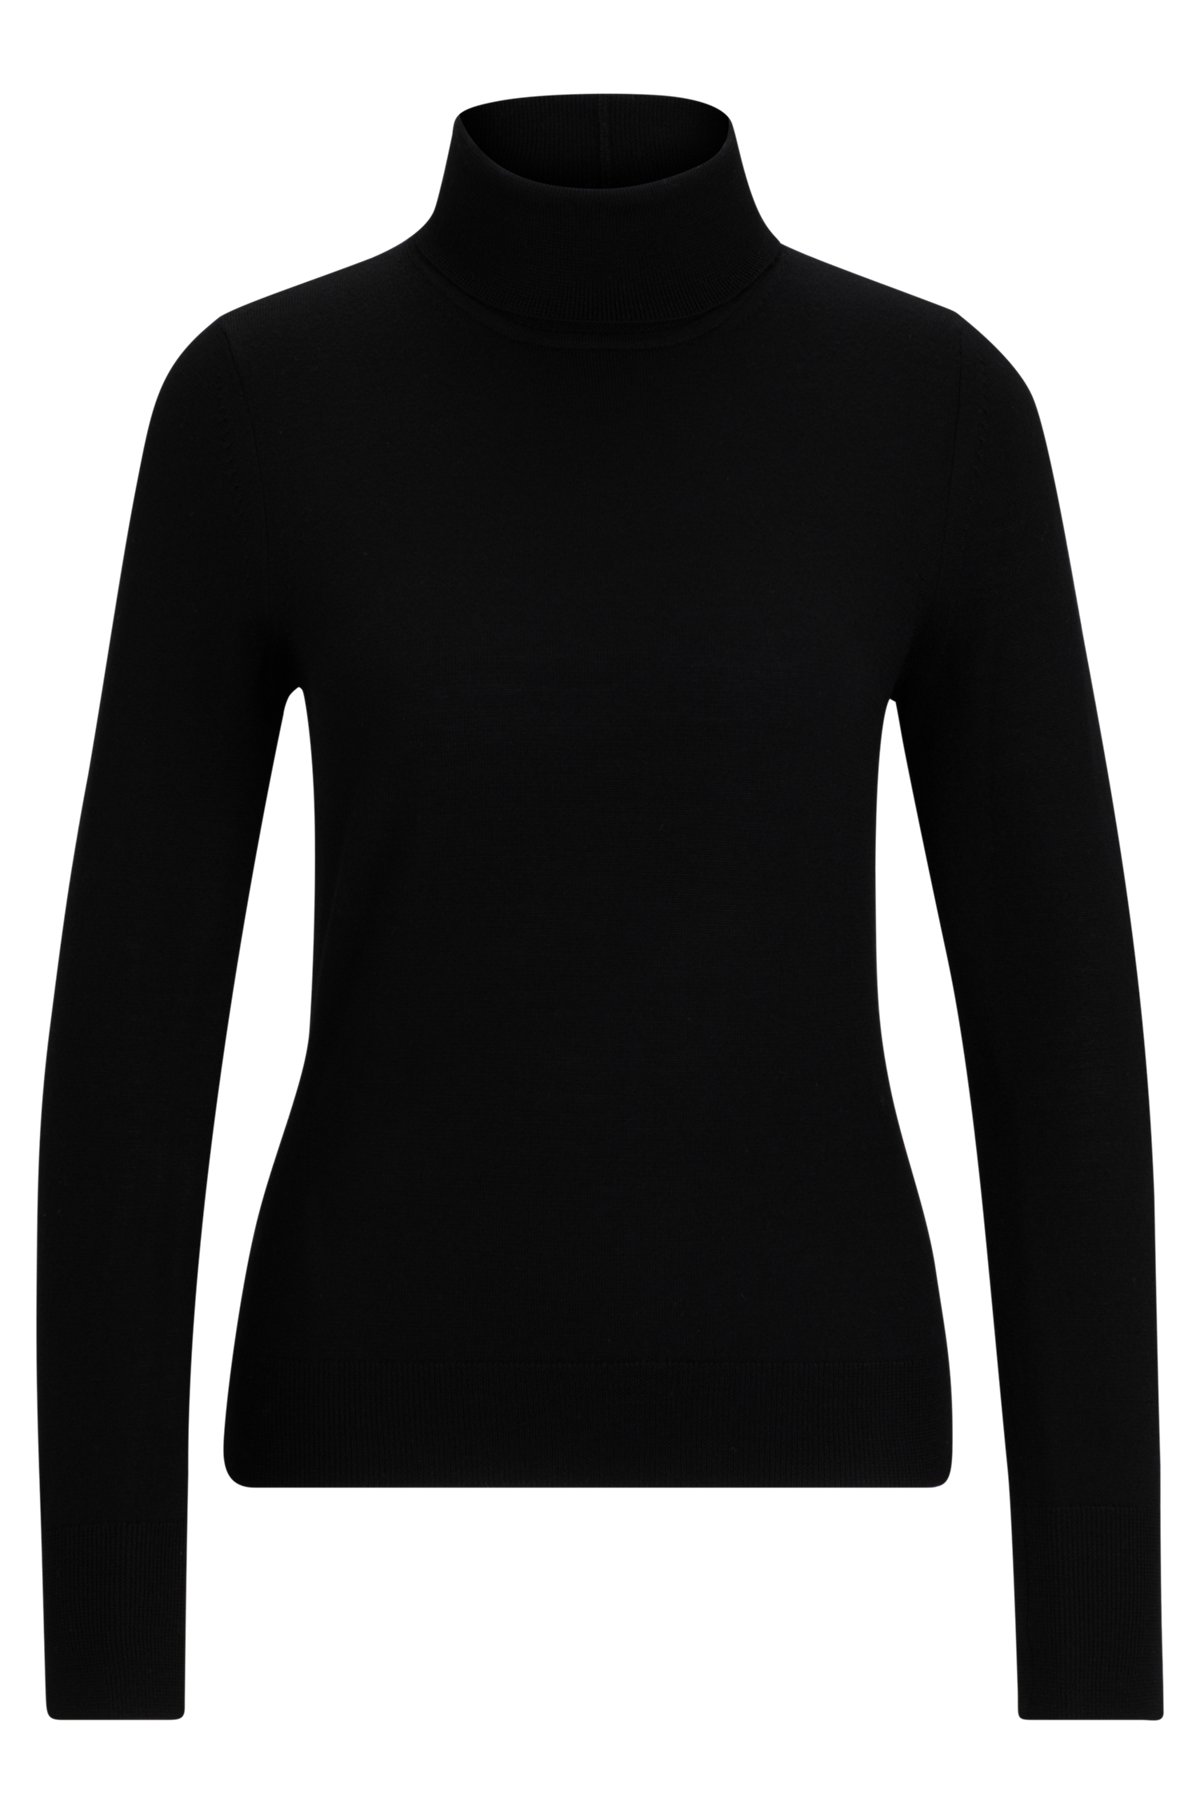 Rollneck sweater in virgin wool, Black